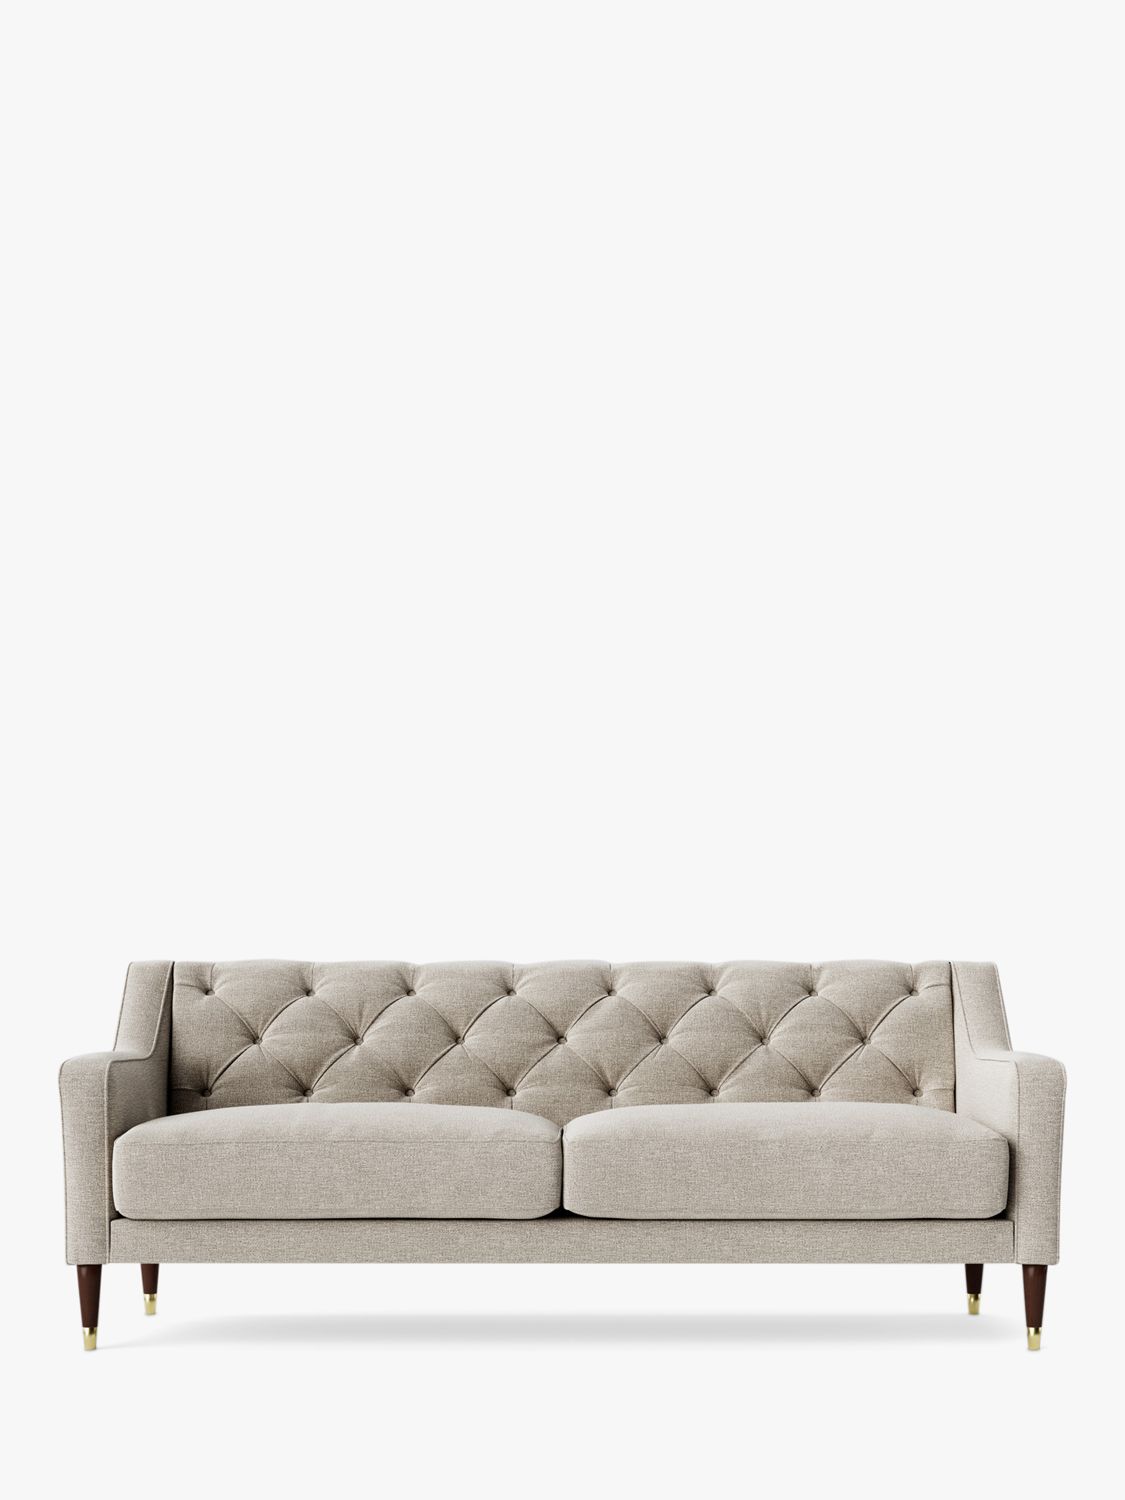 Photo of Swoon pritchard large 3 seater sofa dark leg